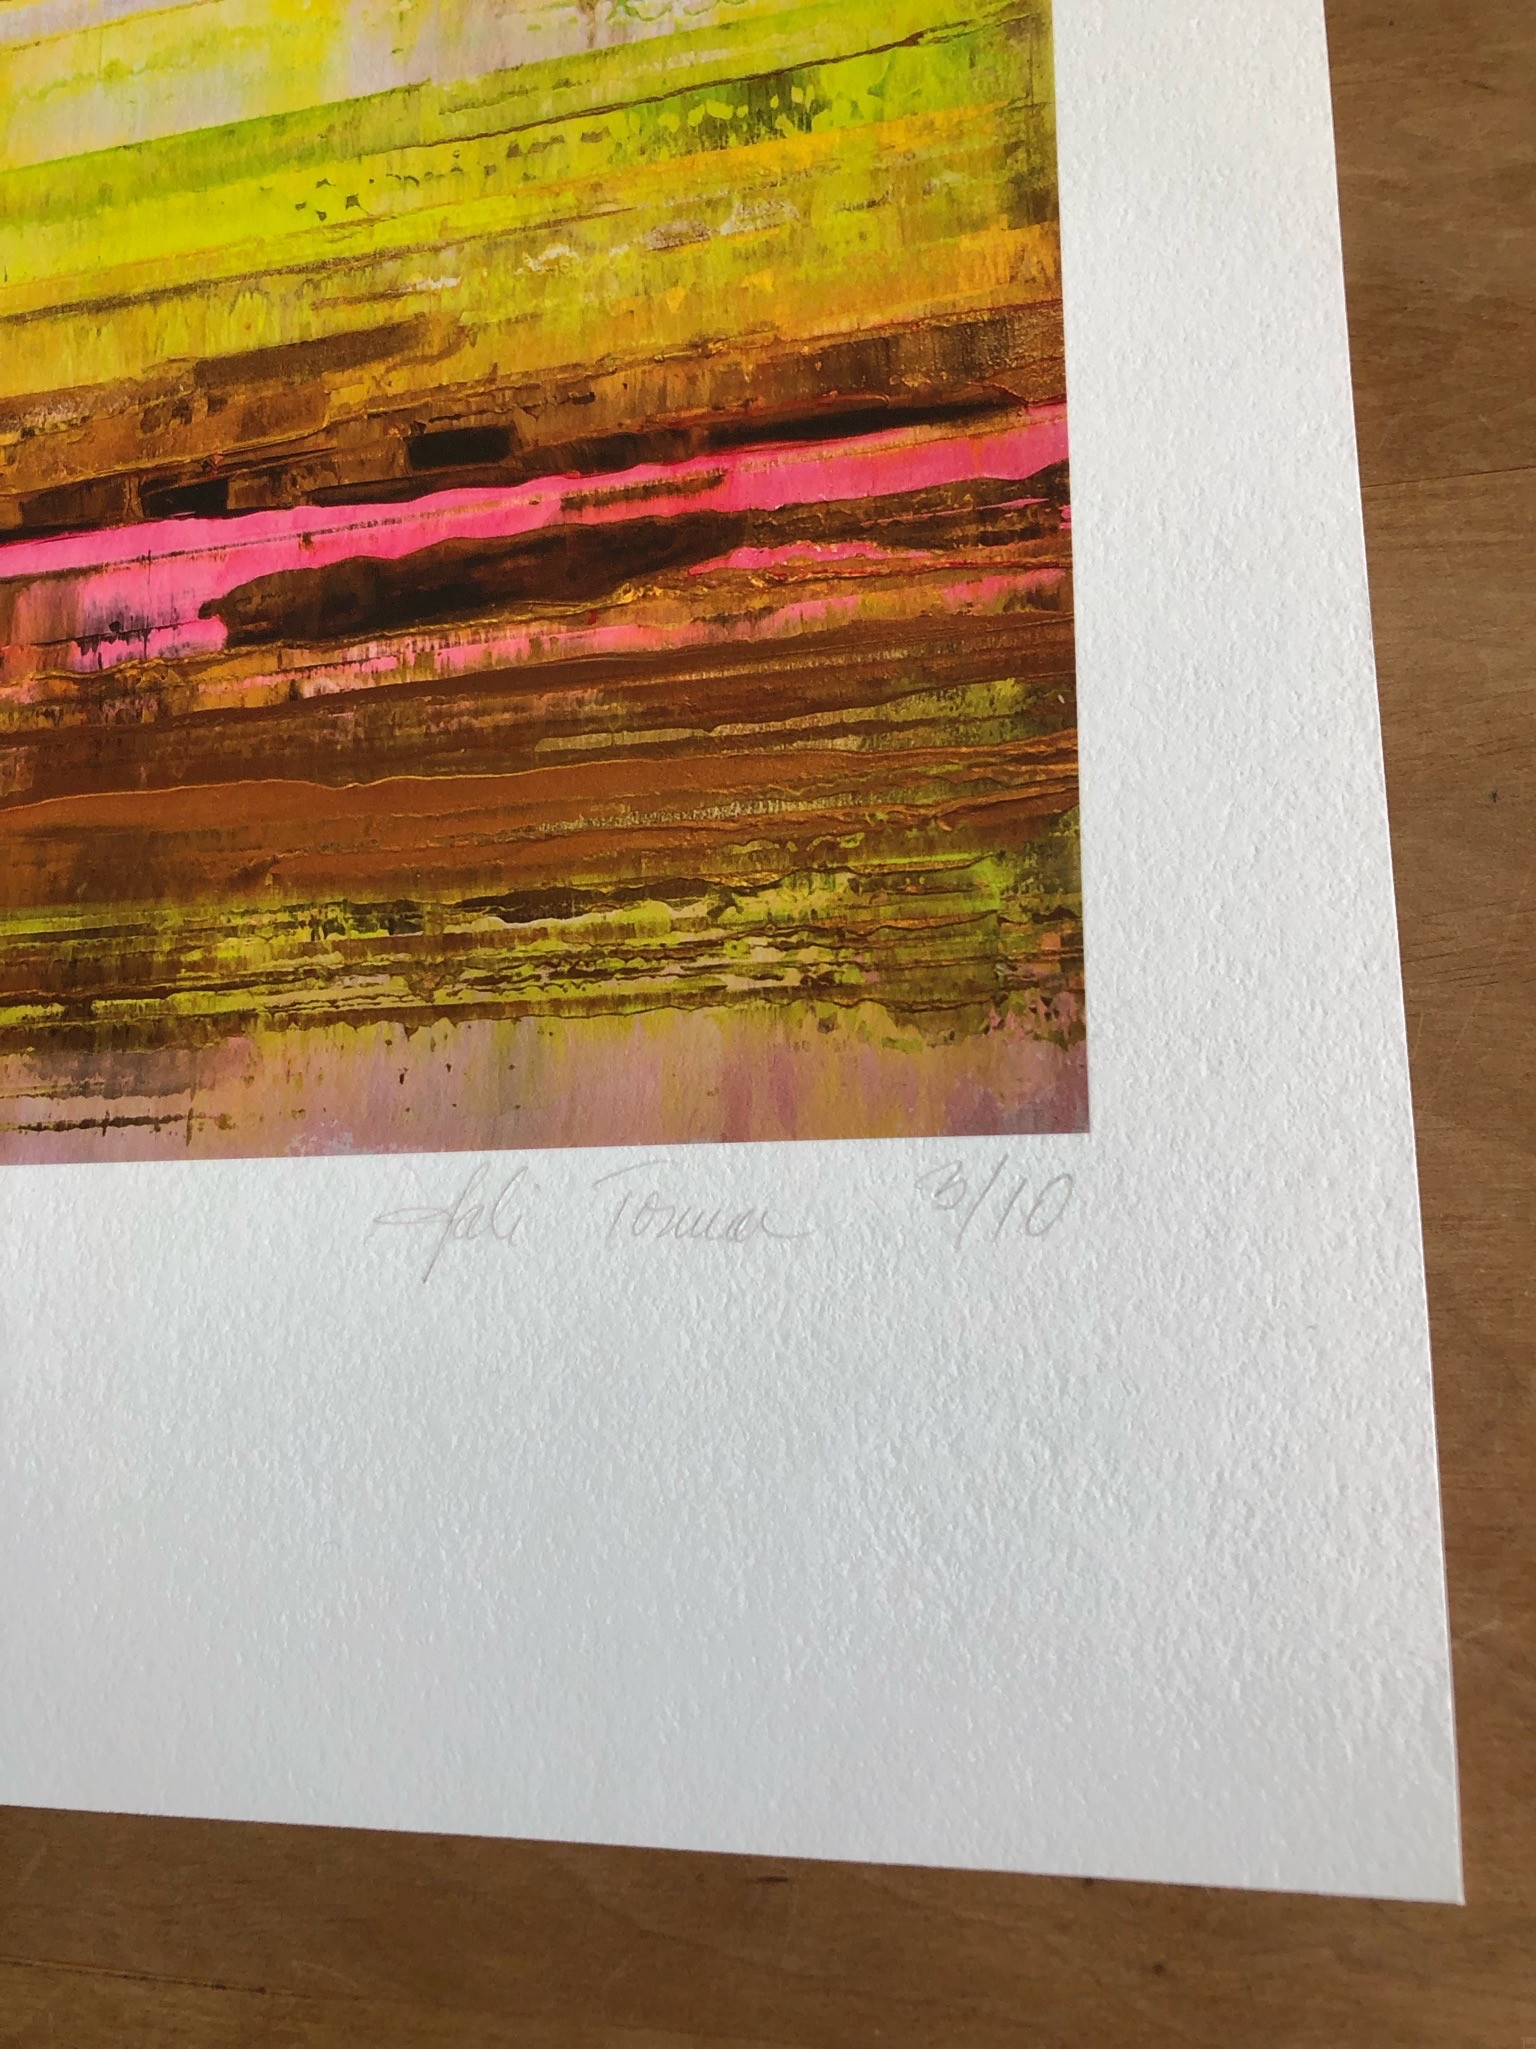 Kunstdruck Prisma 13 - Pinker Nil by Torma | Fineartprint Hahnemühle, Limitierung 10 - signiert